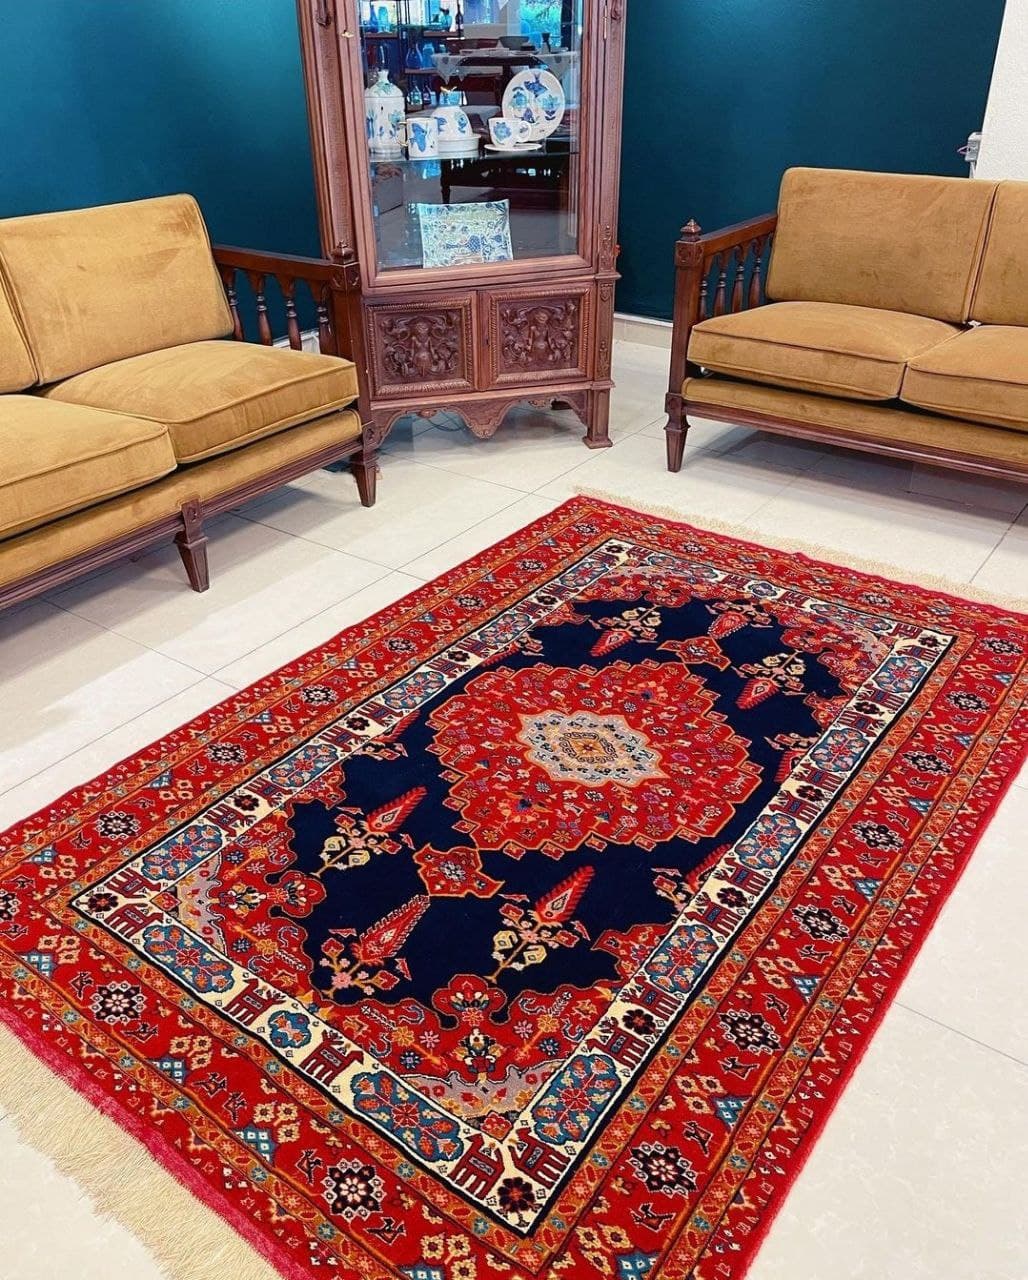 Symbols and semiotics in Iranian carpets